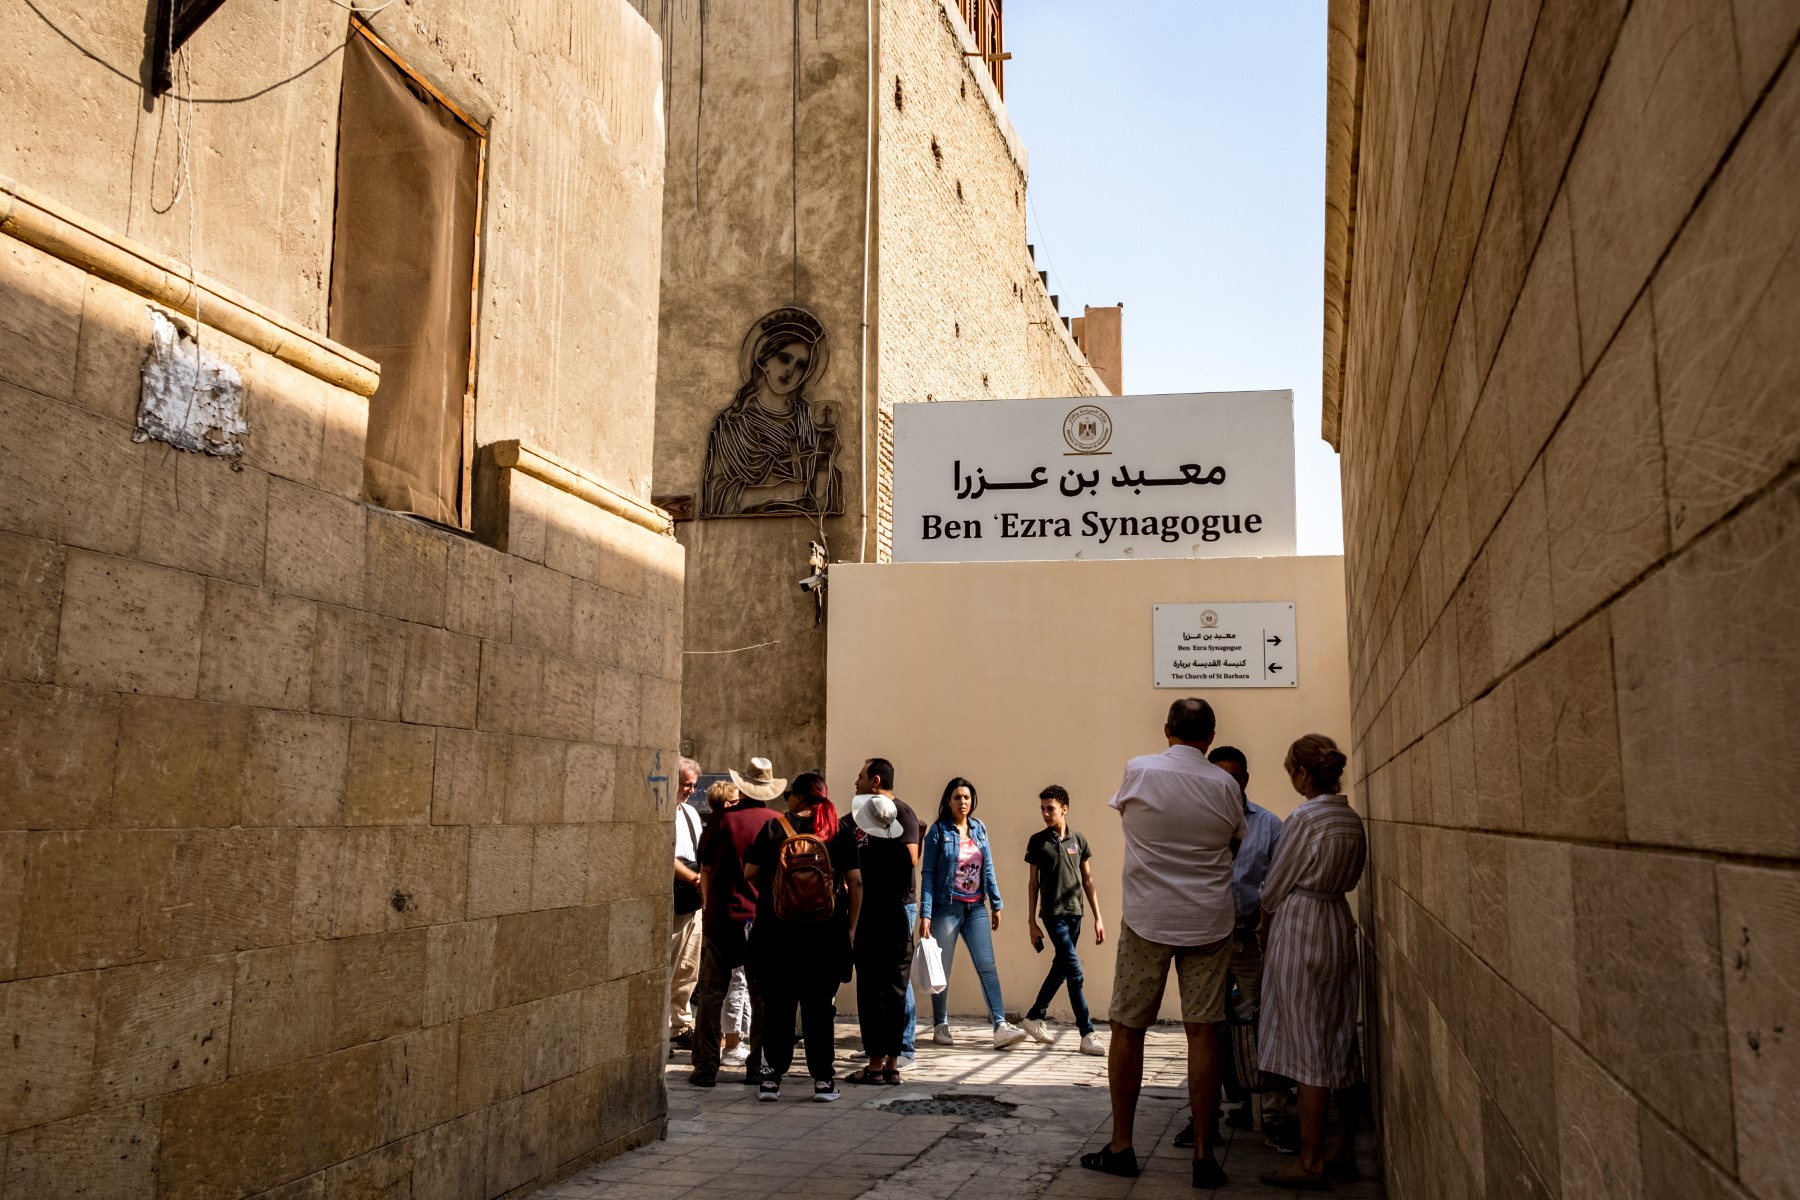 Old Cairo’s Ben Ezra Synagogue, Babylon Fort, aqueduct opened following renovation